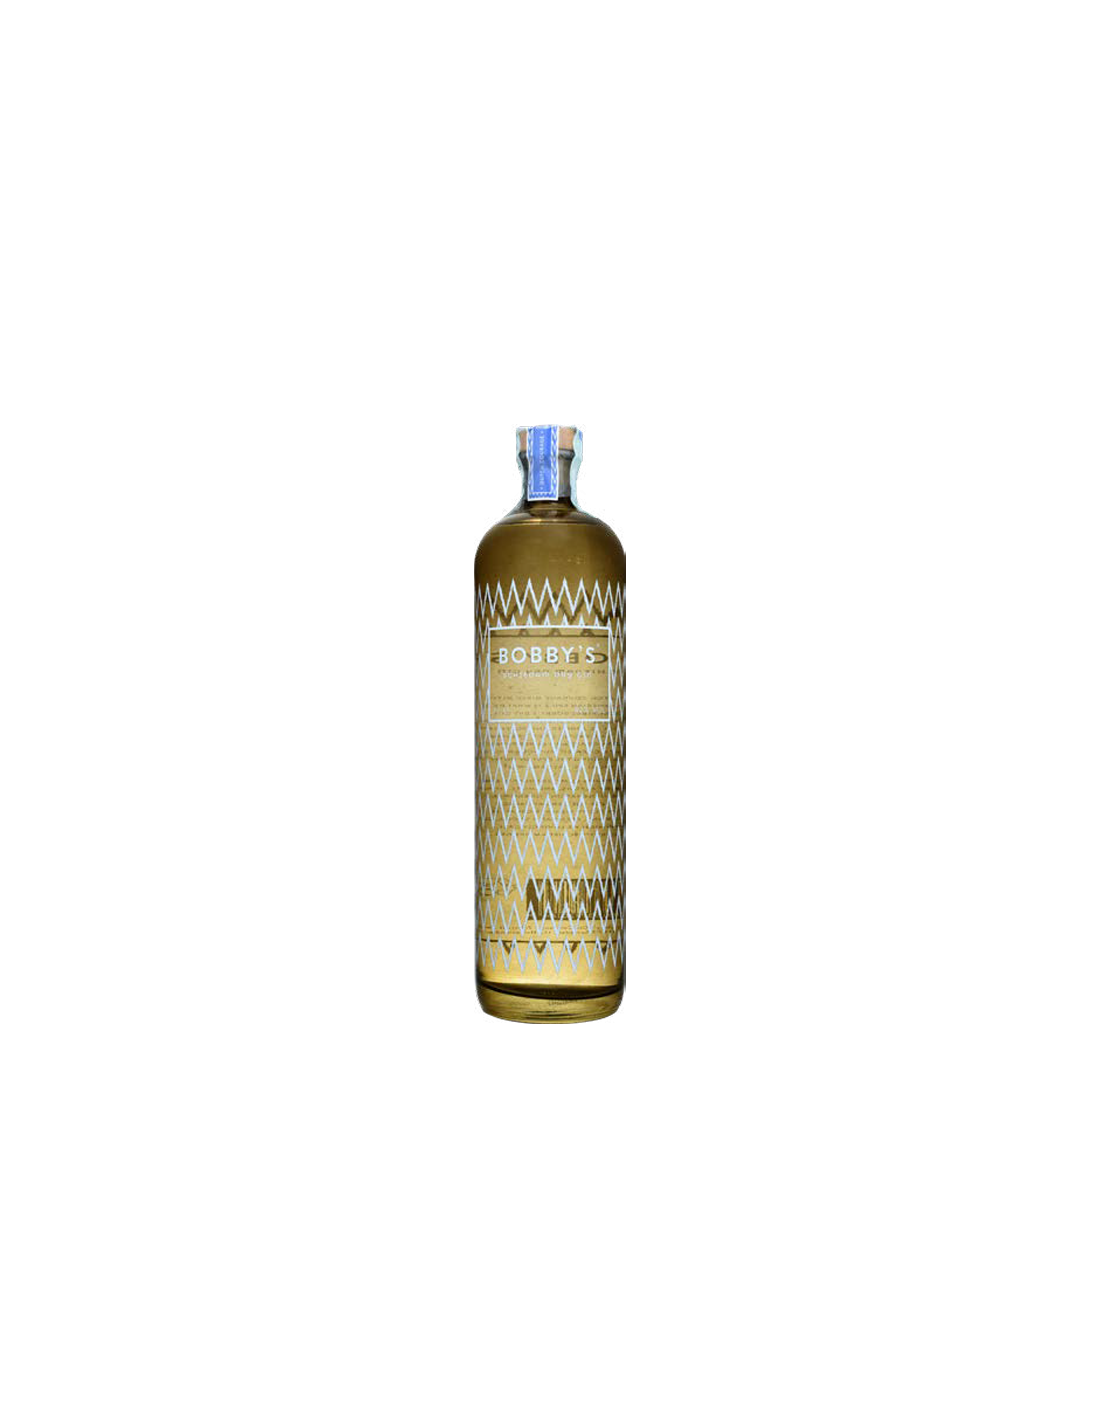 Bobby's Schiedam Dry Gin 42% 1 Litro